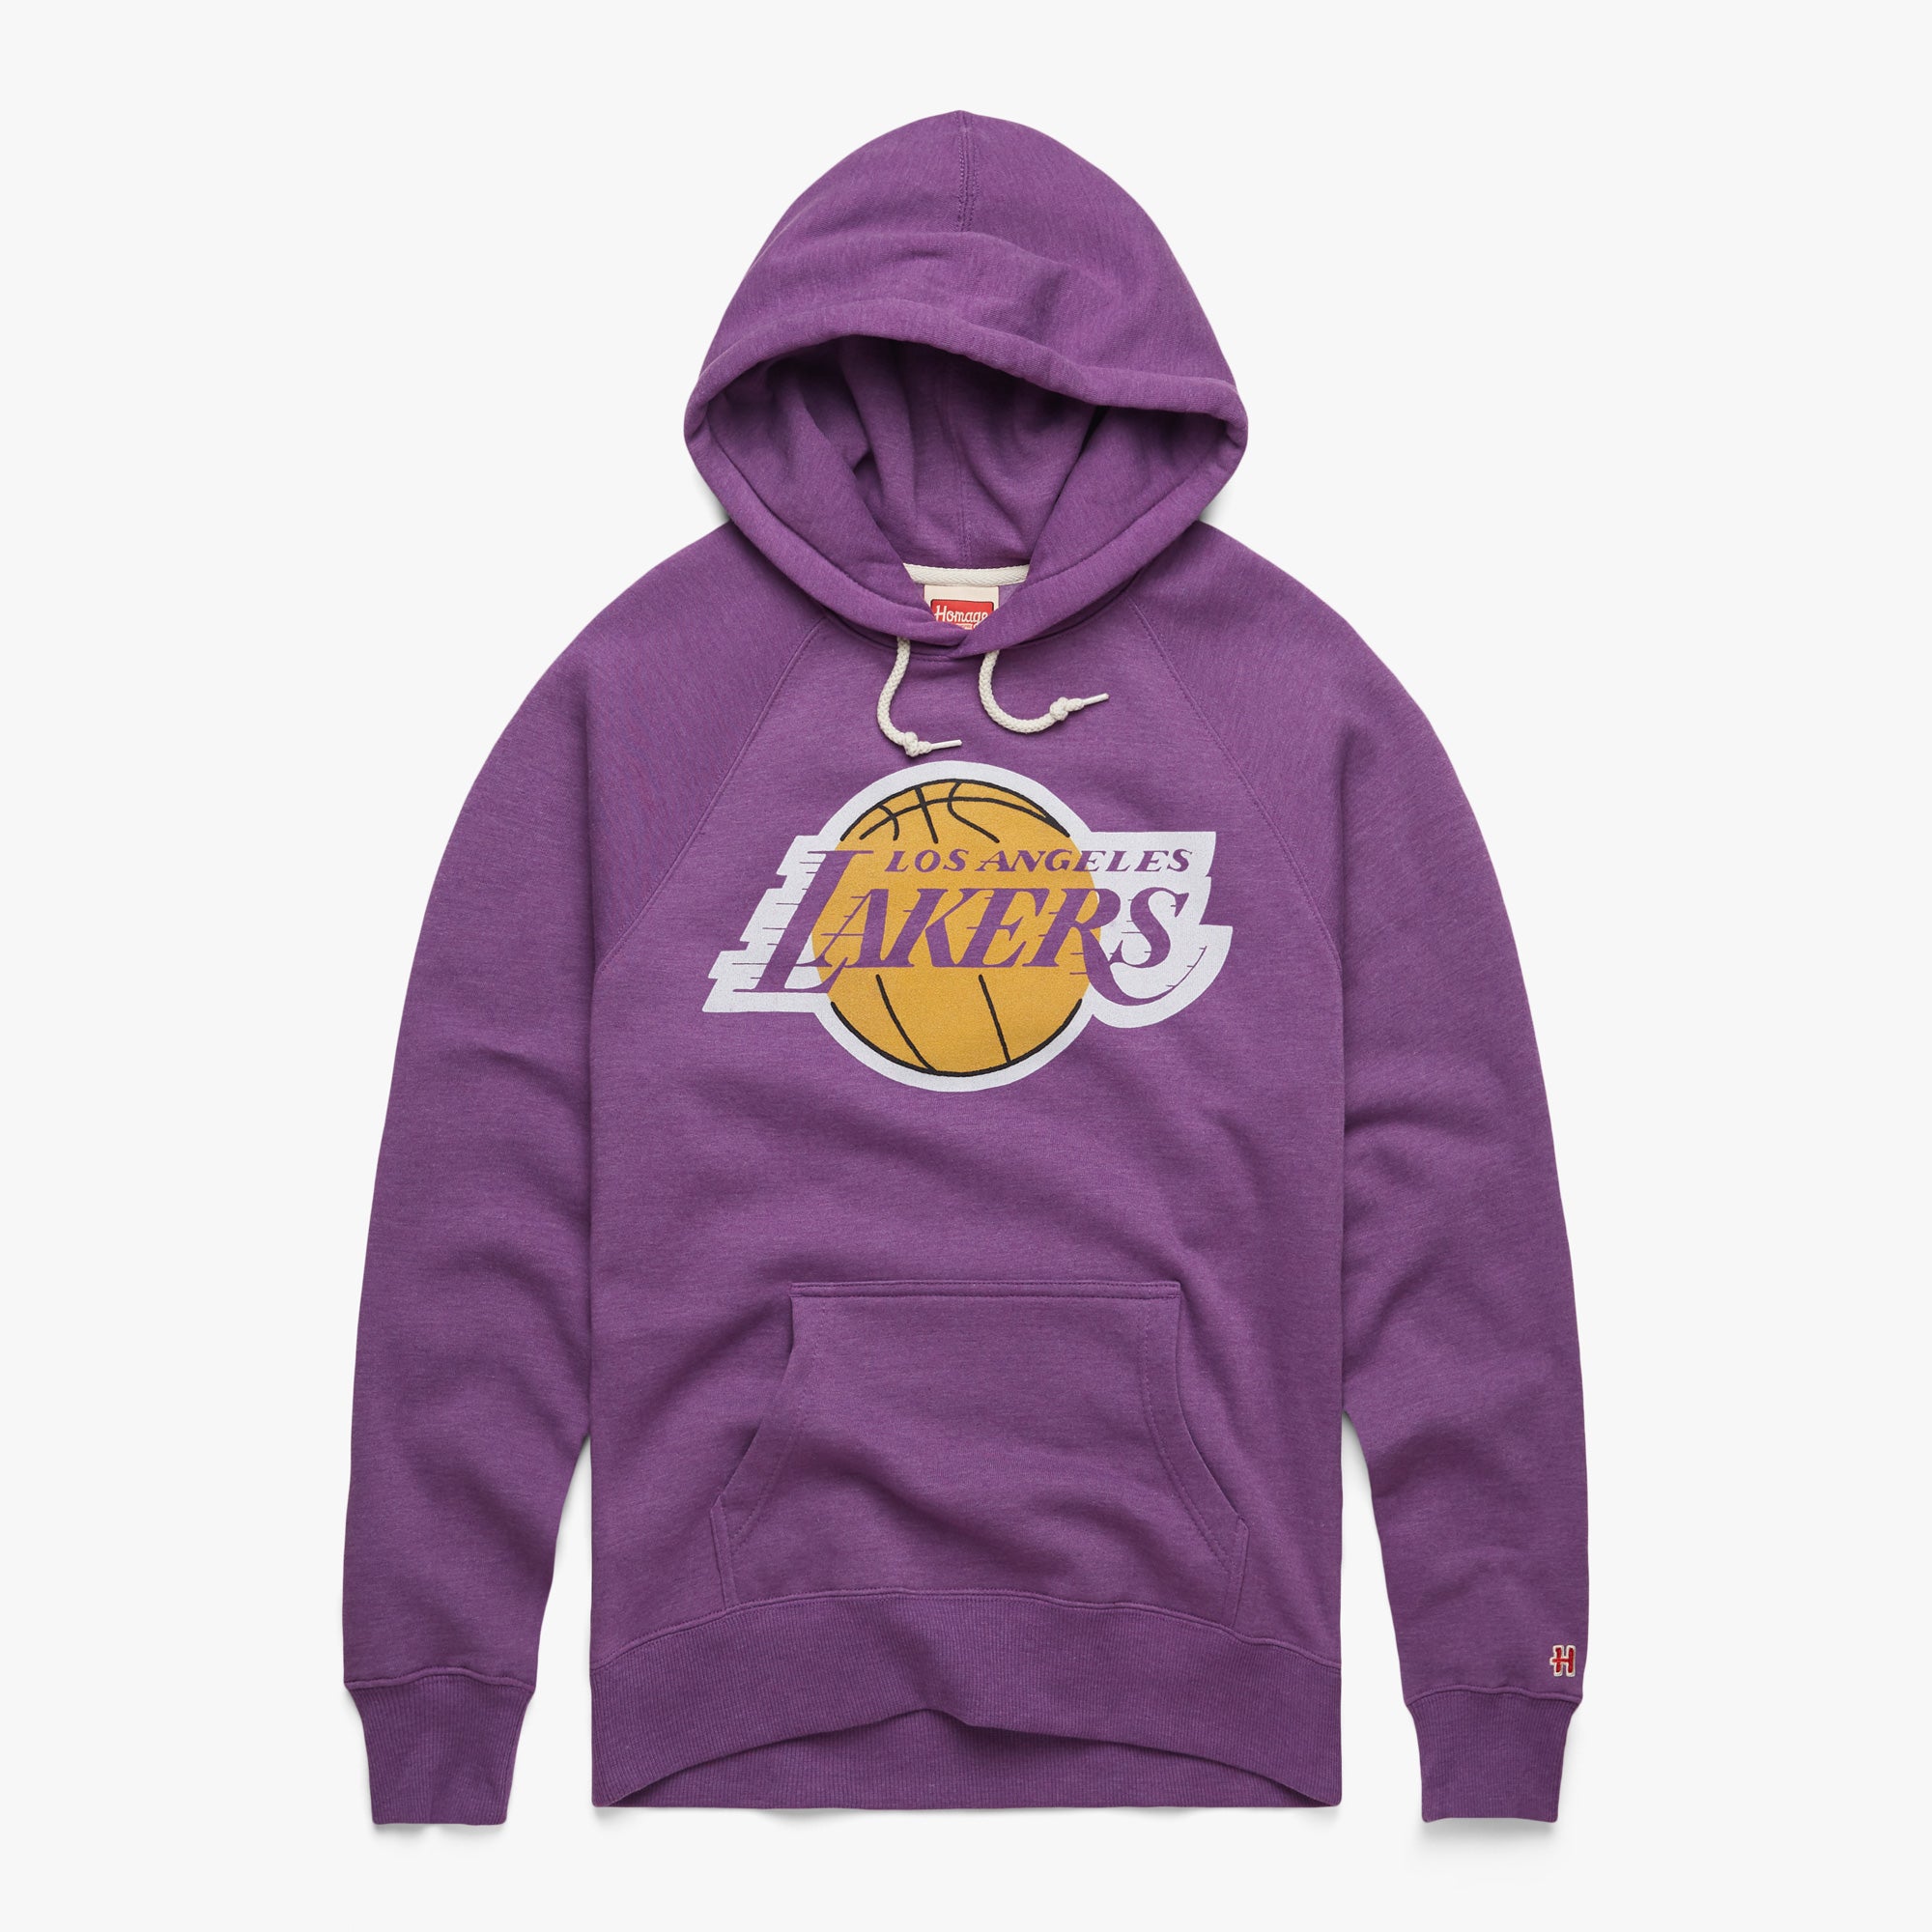 LA Lakers Two Hype Original 90's Team Kente Letter Hoodie Size Large Men's  Sweat